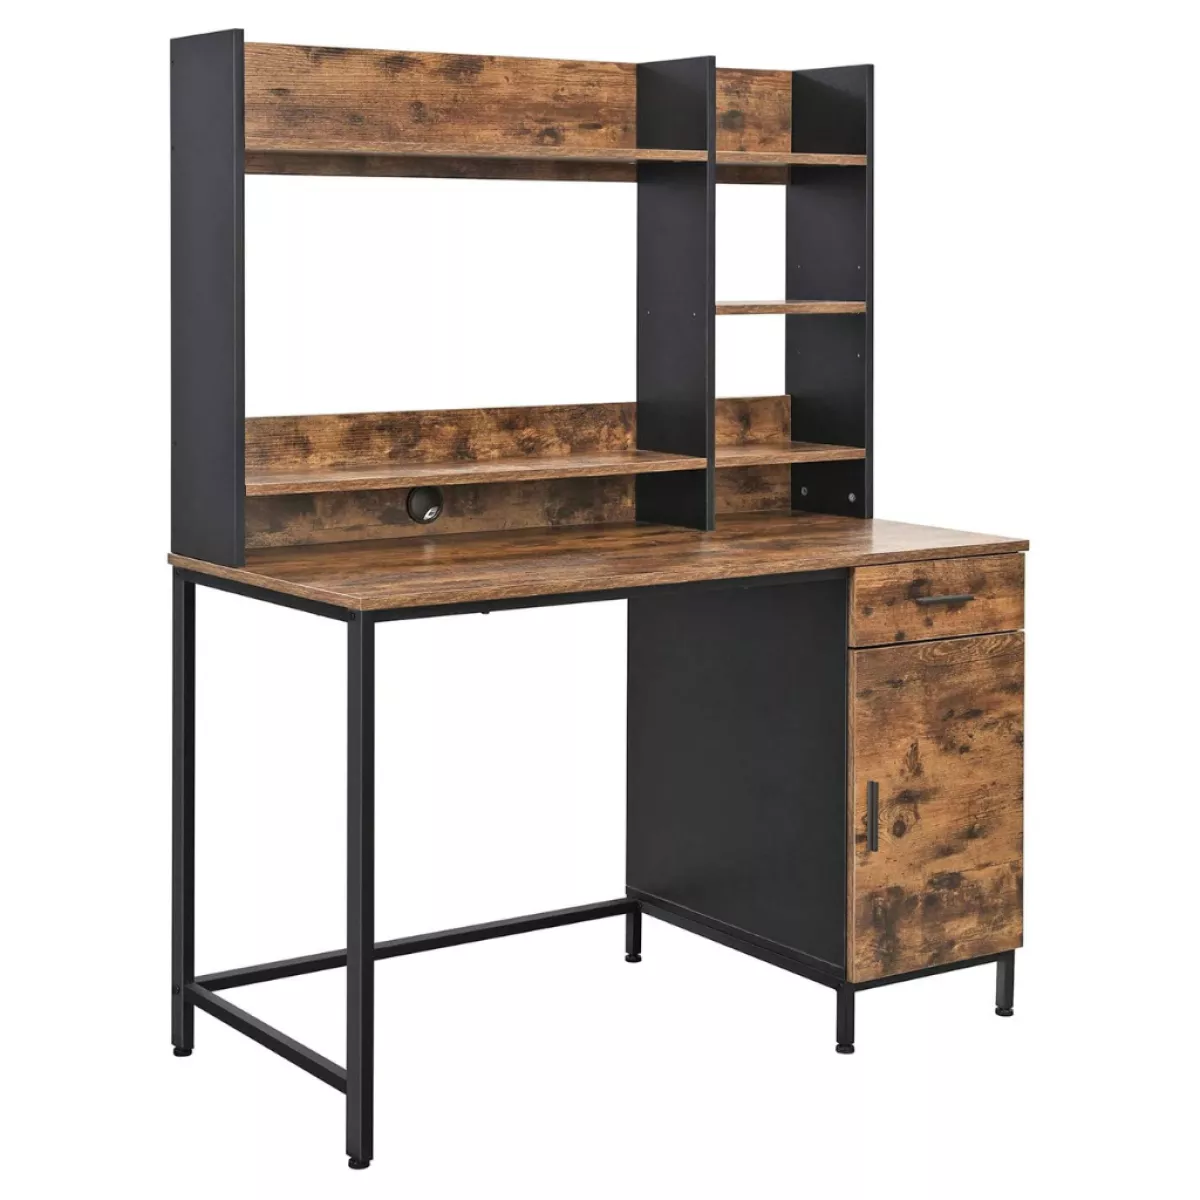 #2 - Skrivebord med reol i industrielt look, rustik brun og sort